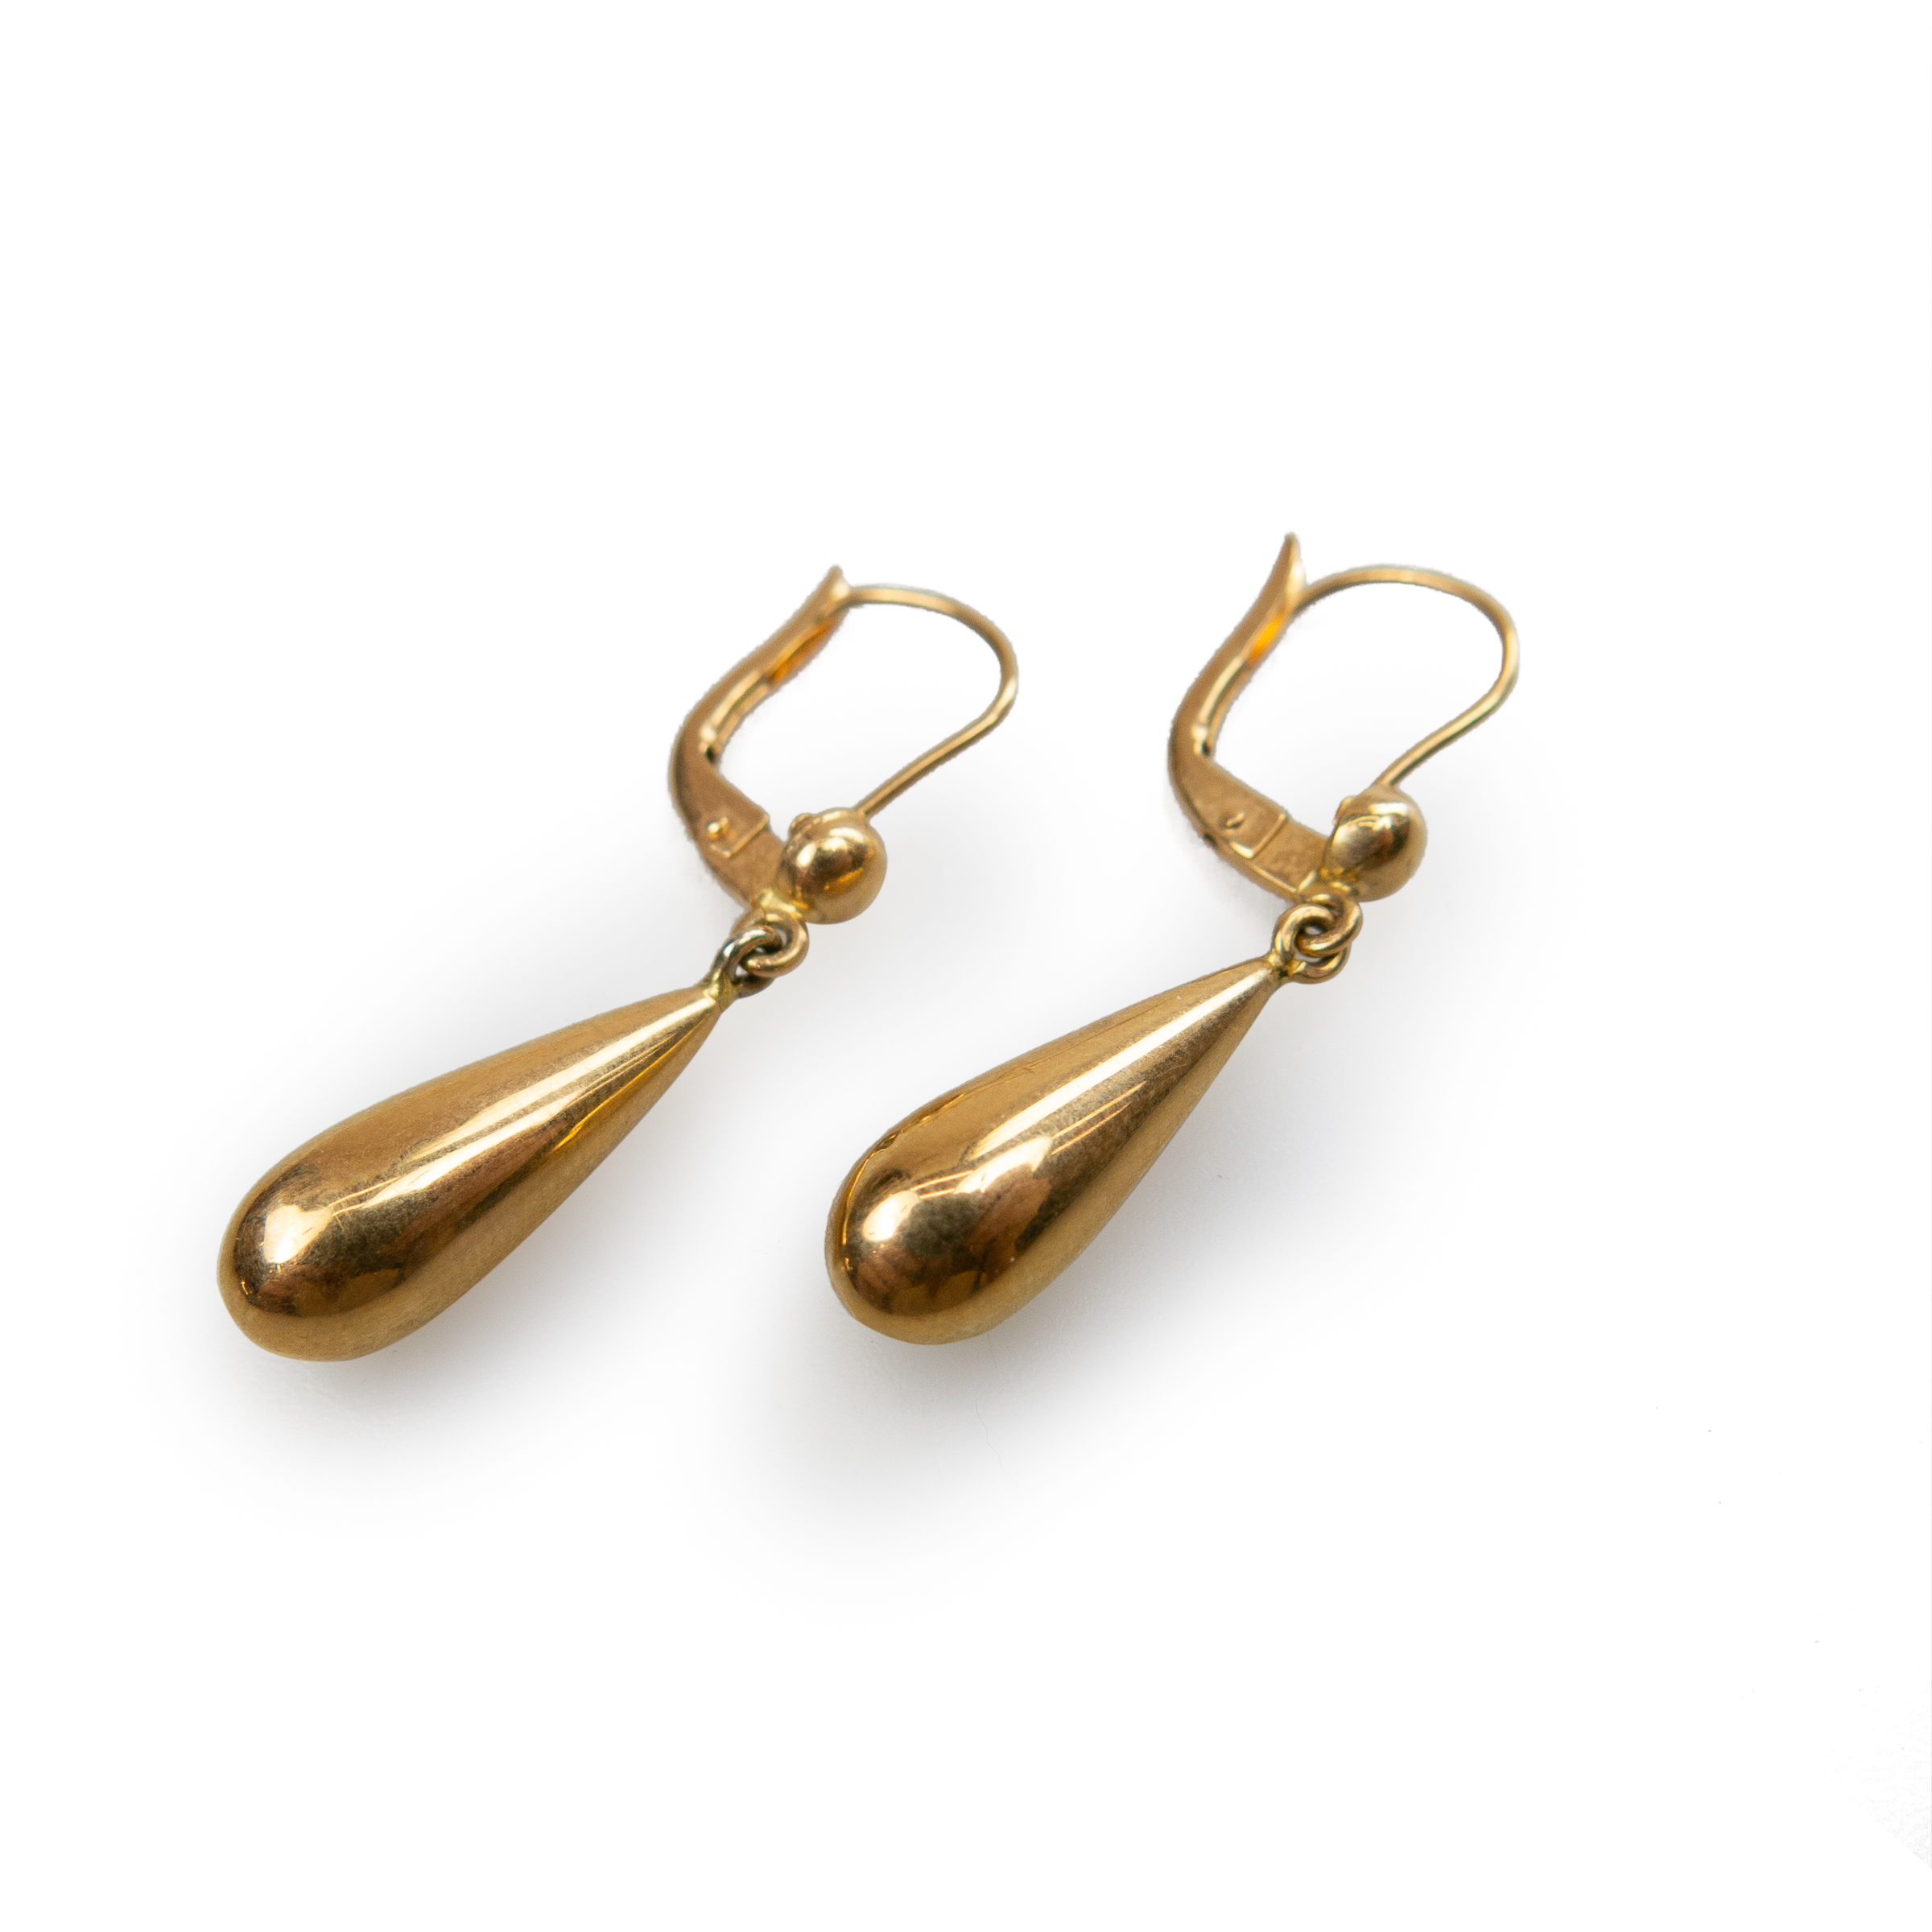 12 x Pairs Of 18k Yellow Gold Drop Earrings